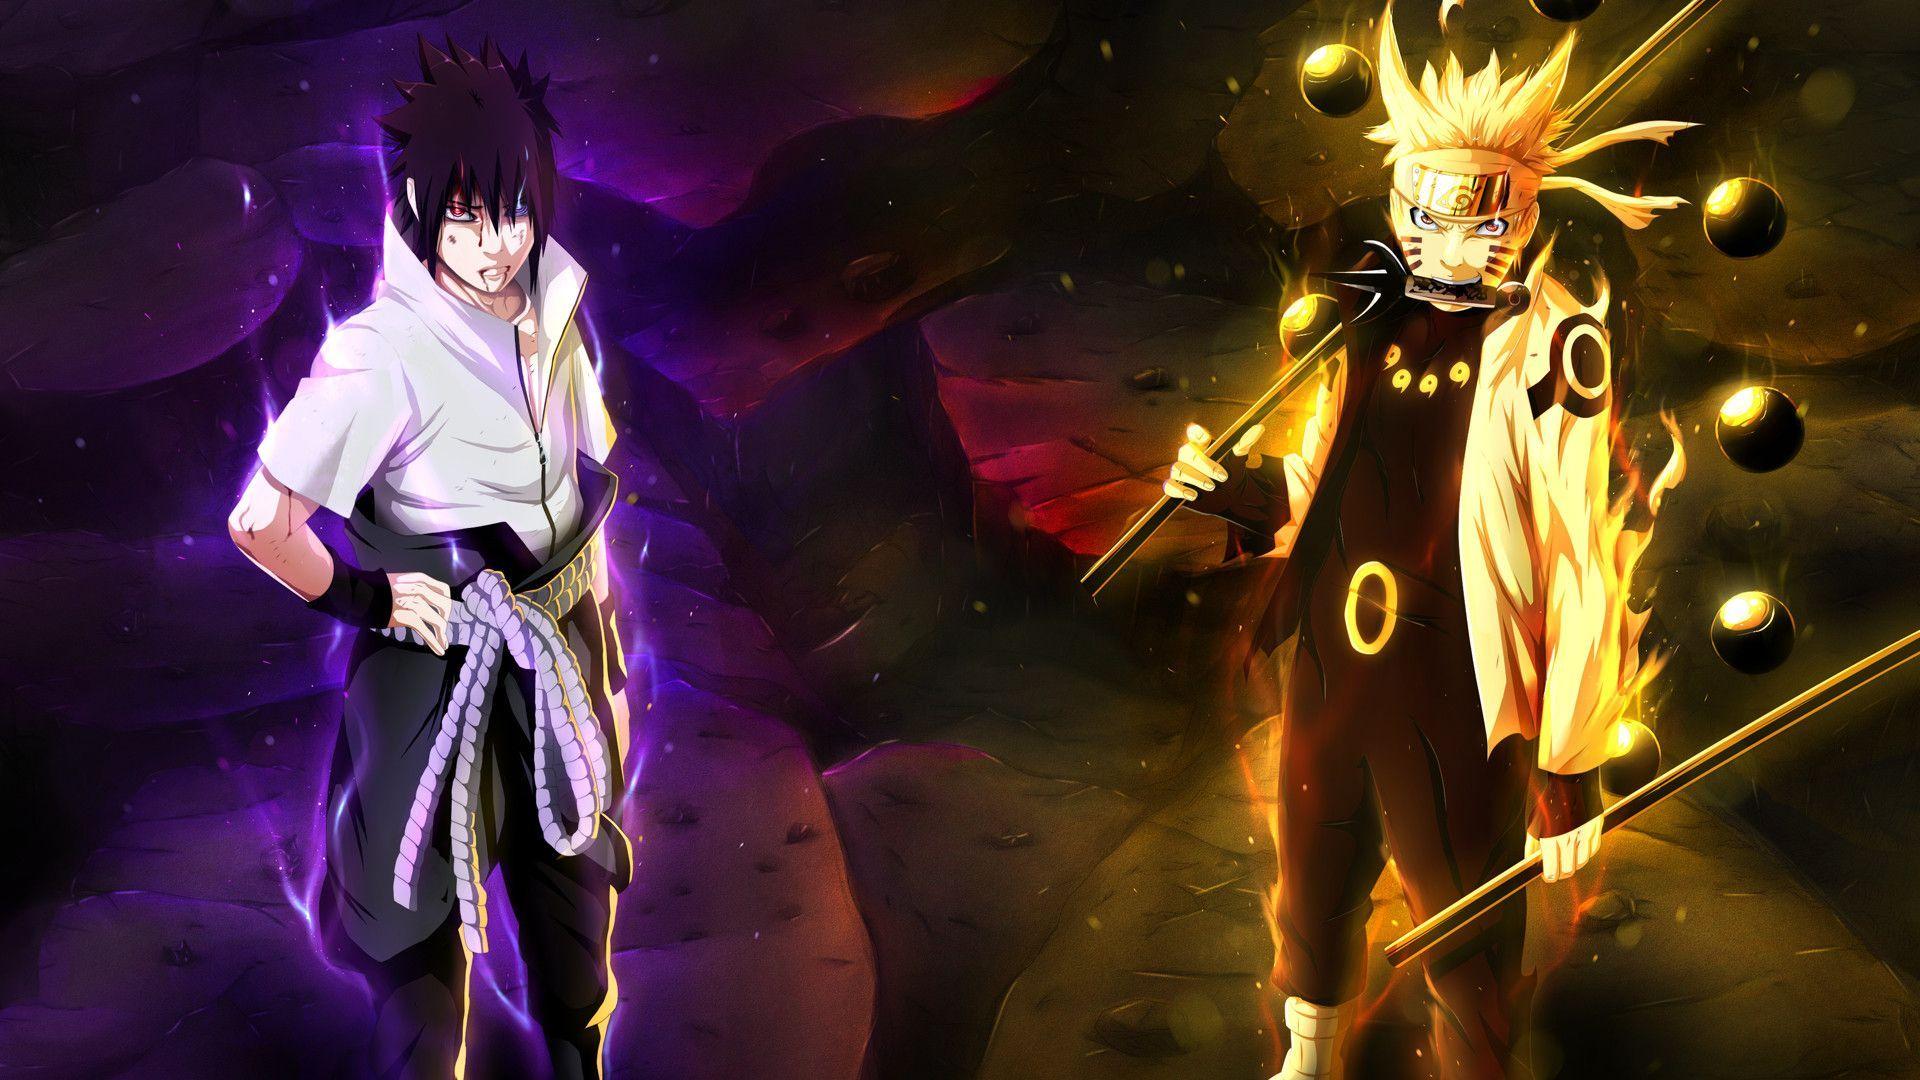 Mecha Naruto And Sasuke The Movie Wallpaper. Queenwallpaper